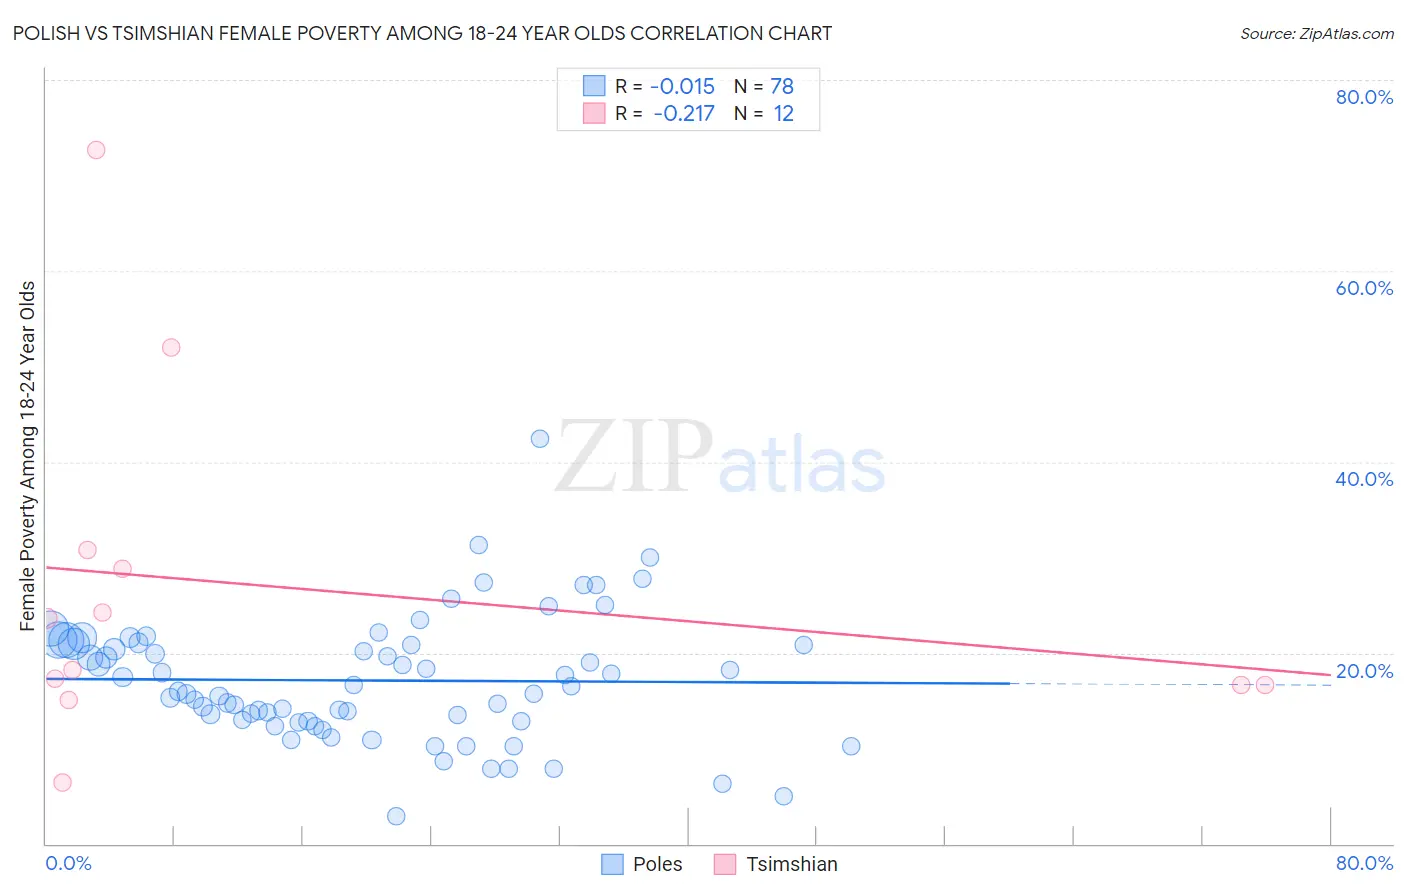 Polish vs Tsimshian Female Poverty Among 18-24 Year Olds